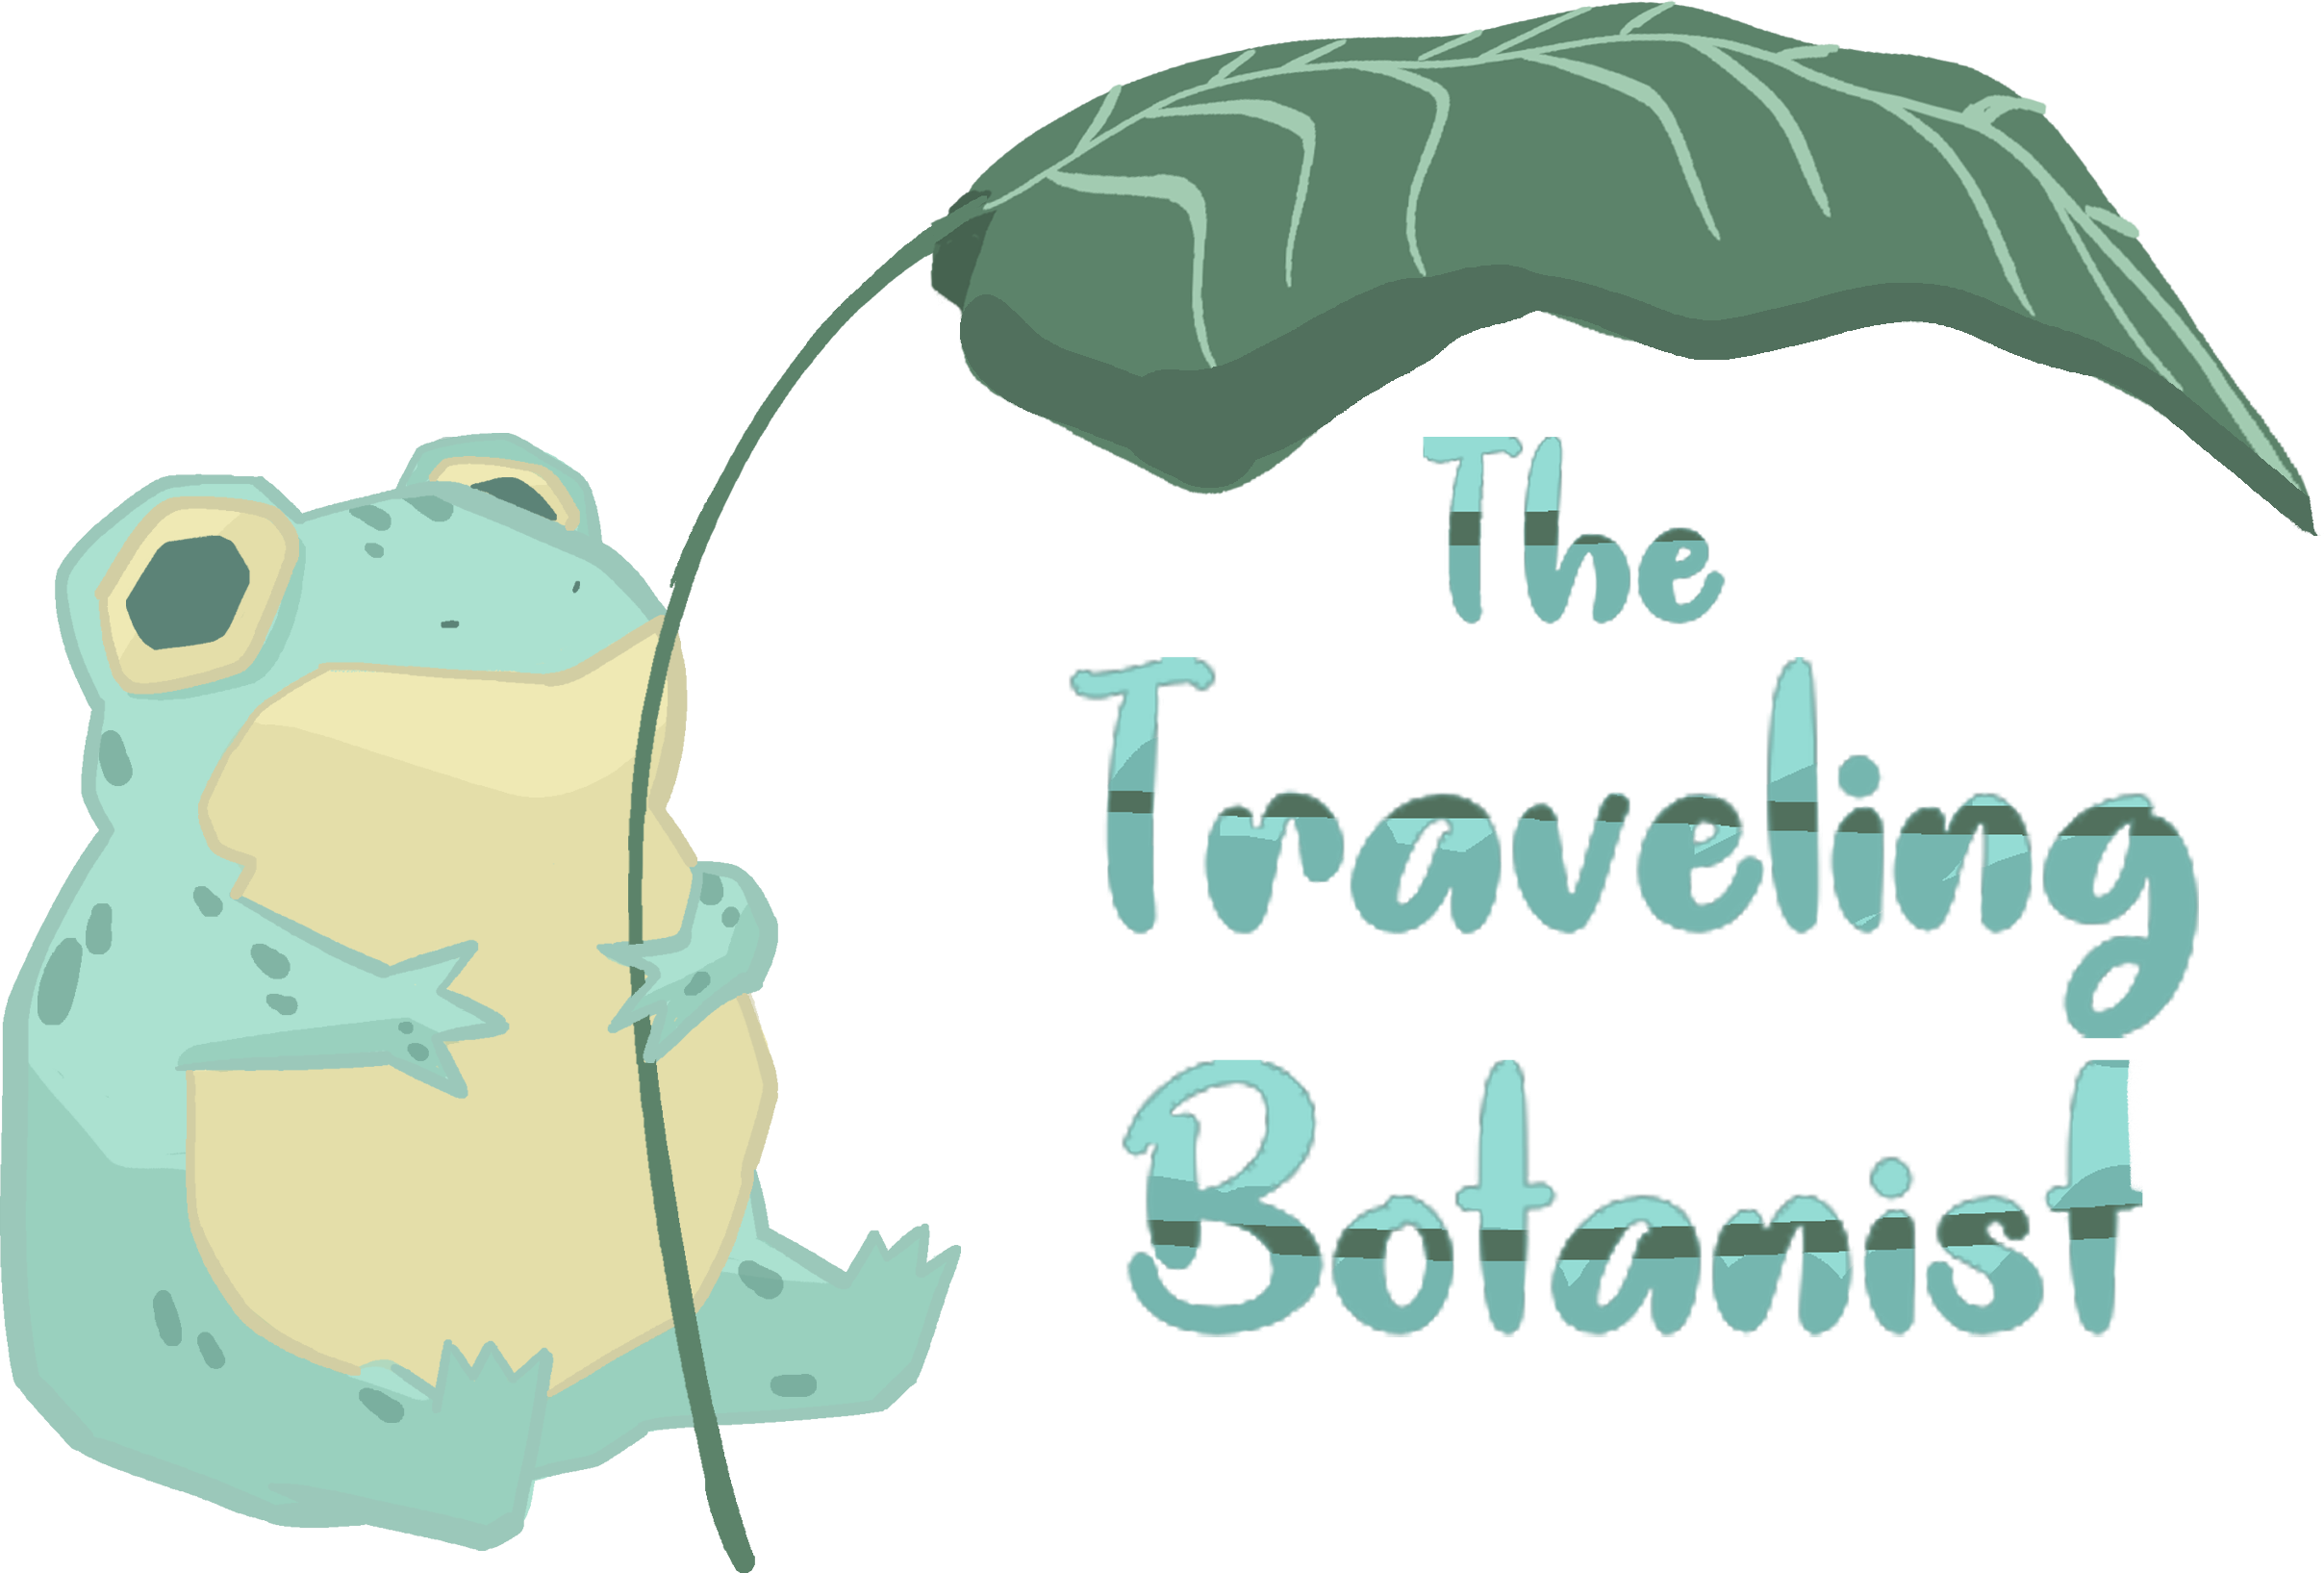 The Traveling Botanist